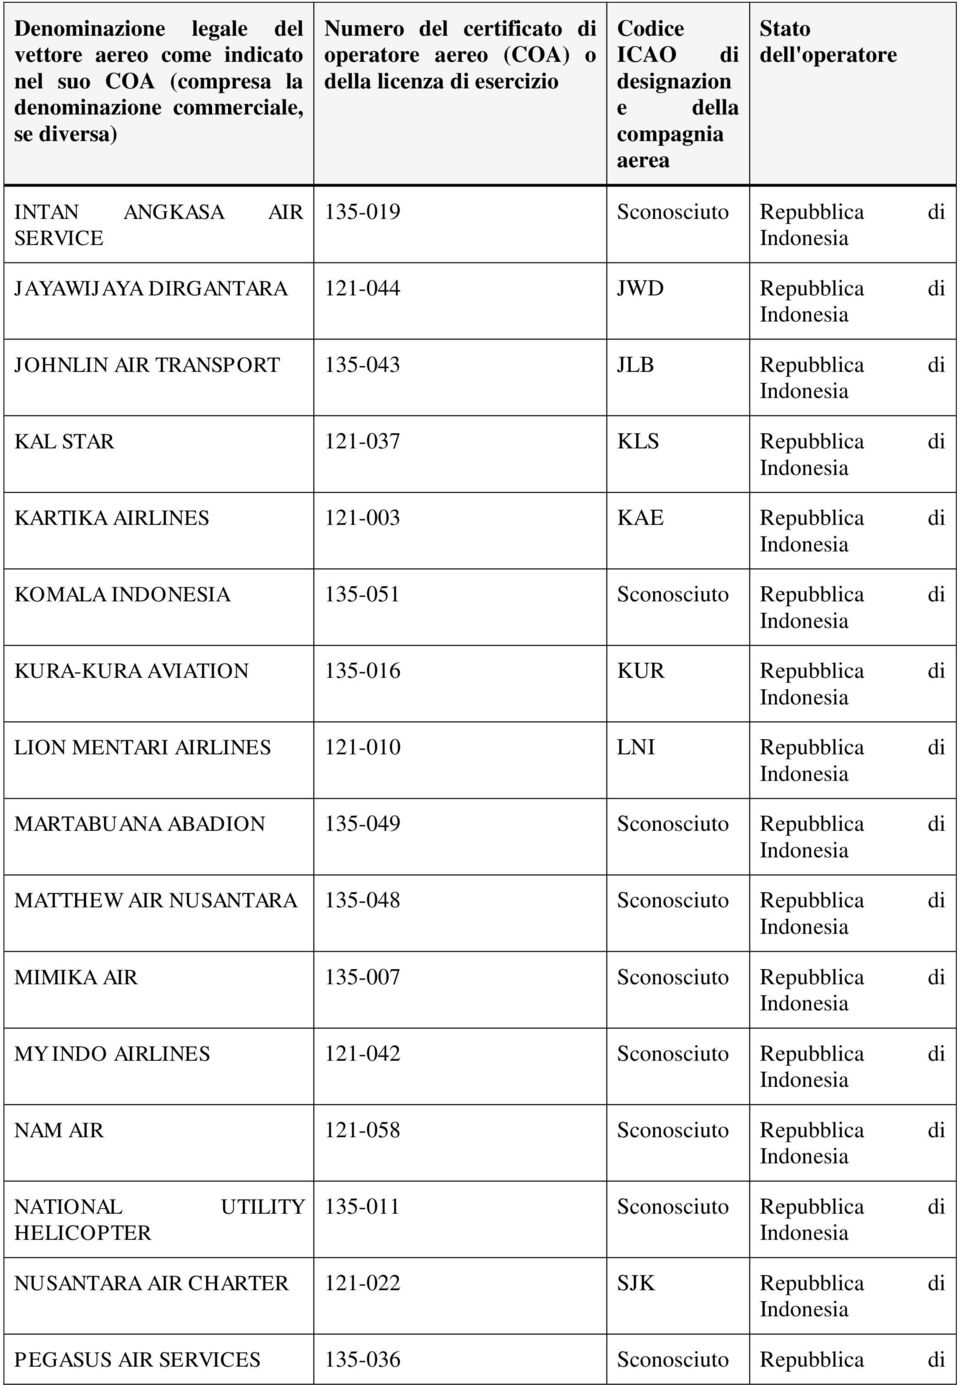 AVIATION 135-016 KUR di LION MENTARI AIRLINES 121-010 LNI di MARTABUANA ABADION 135-049 di MATTHEW AIR NUSANTARA 135-048 di MIMIKA AIR 135-007 di